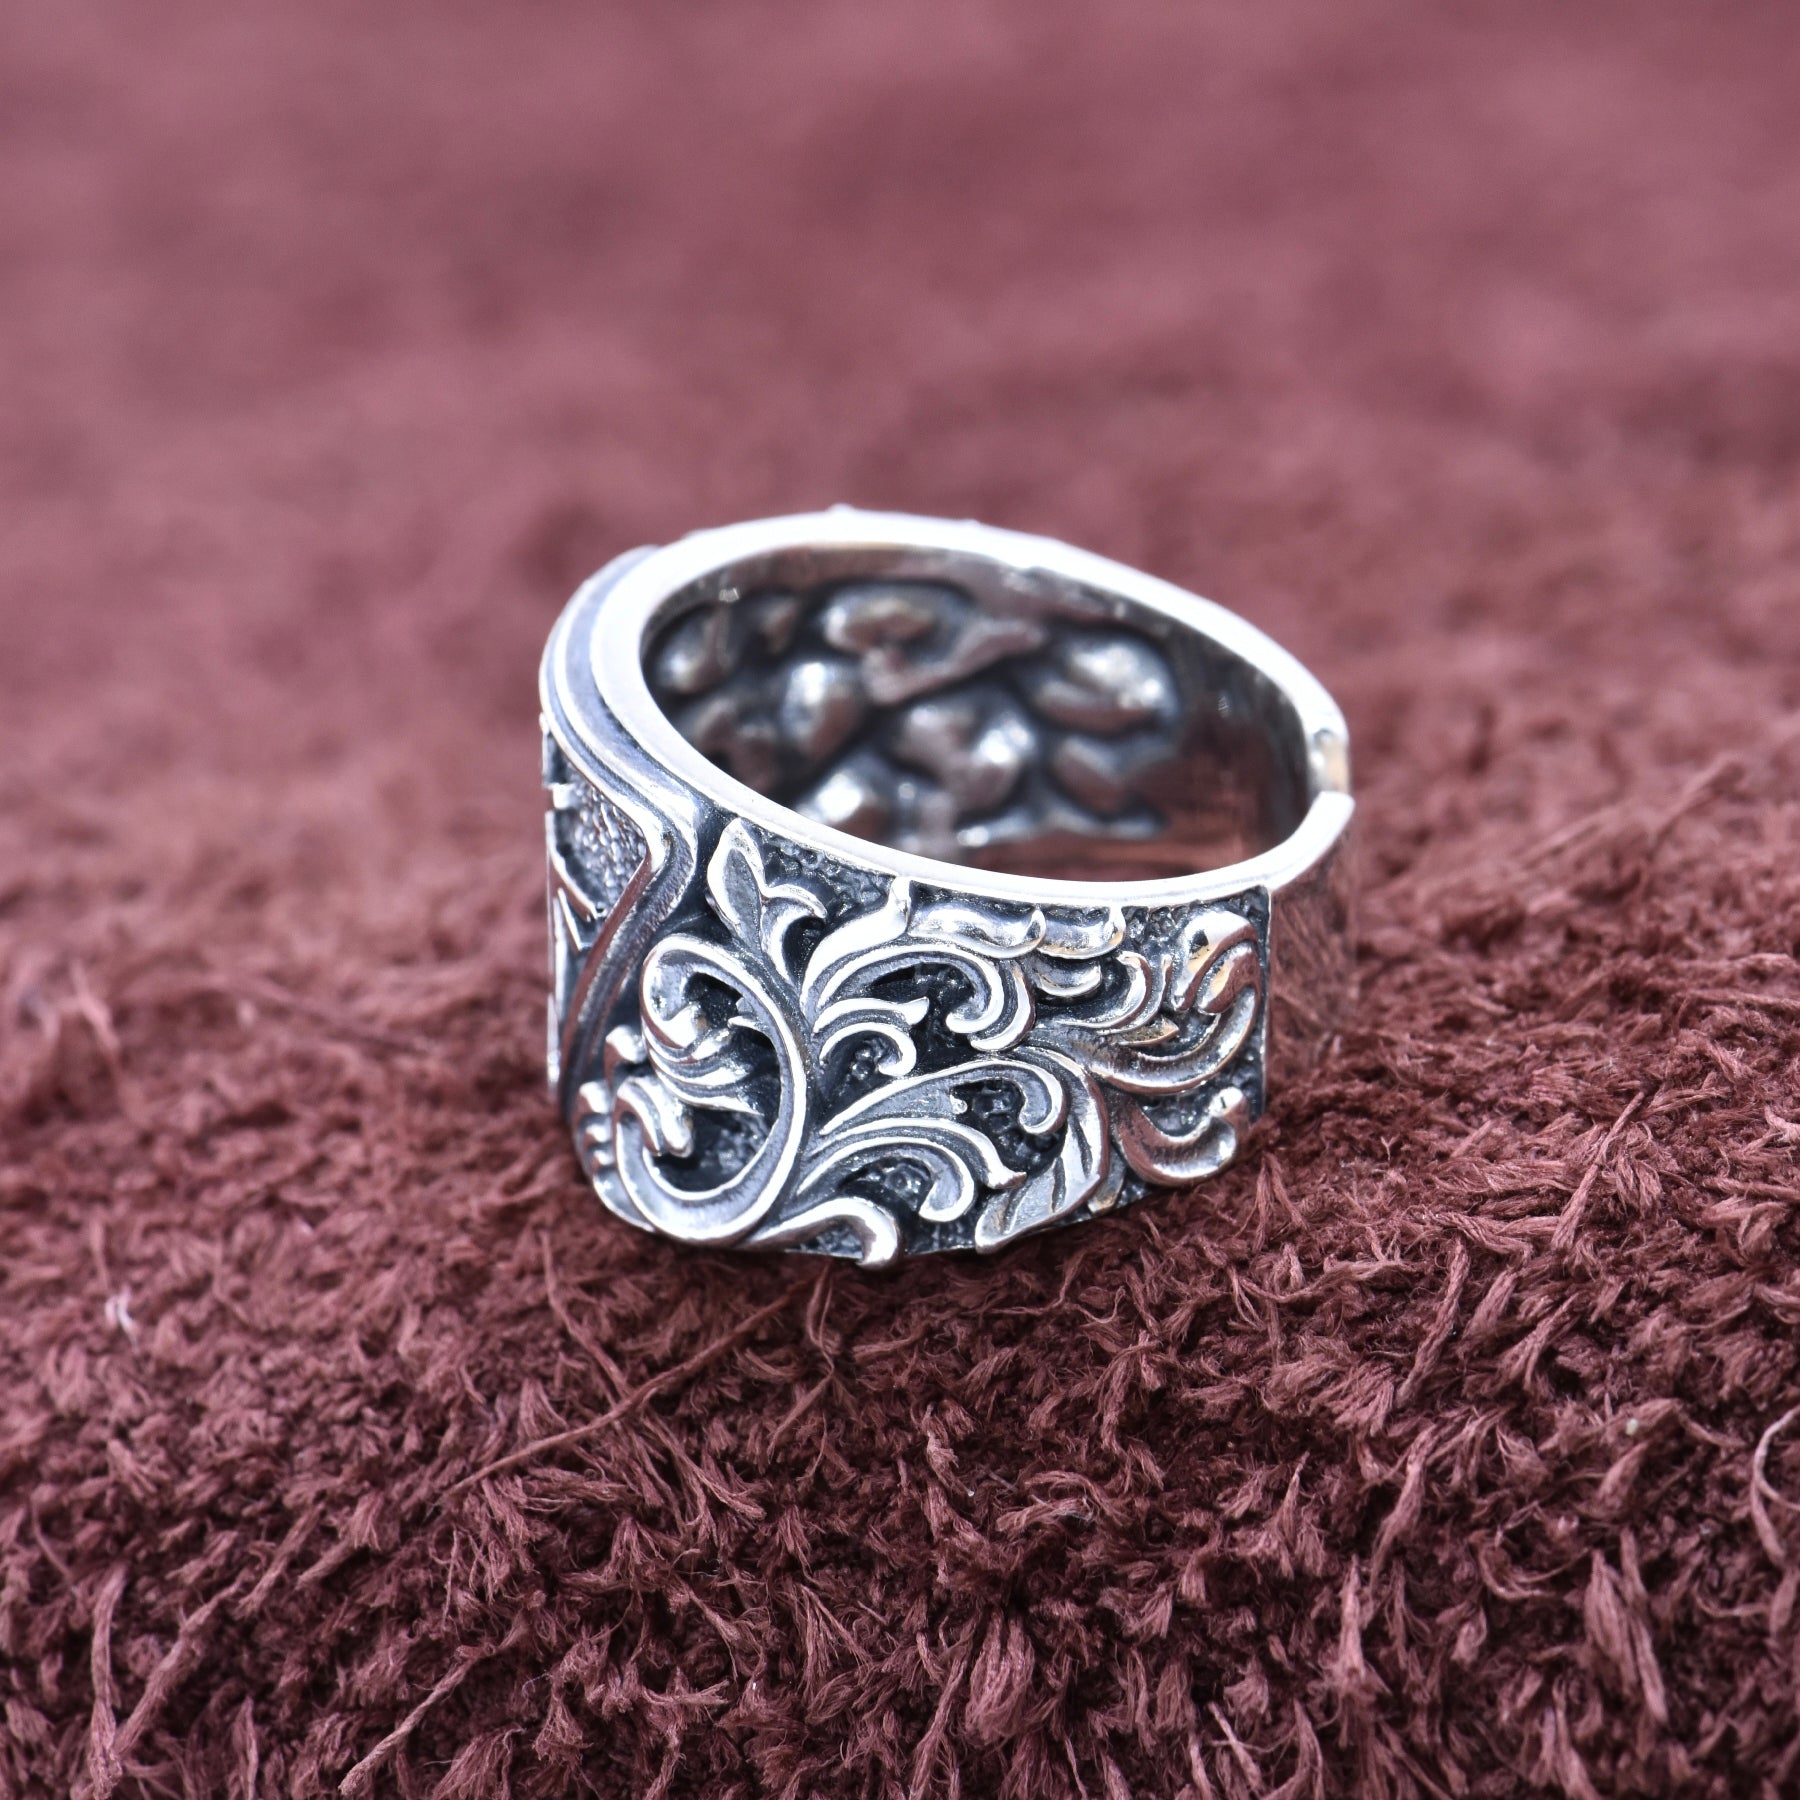 "Elegant Men's Silver Ring with Ornaments, highlighting detailed craftsmanship